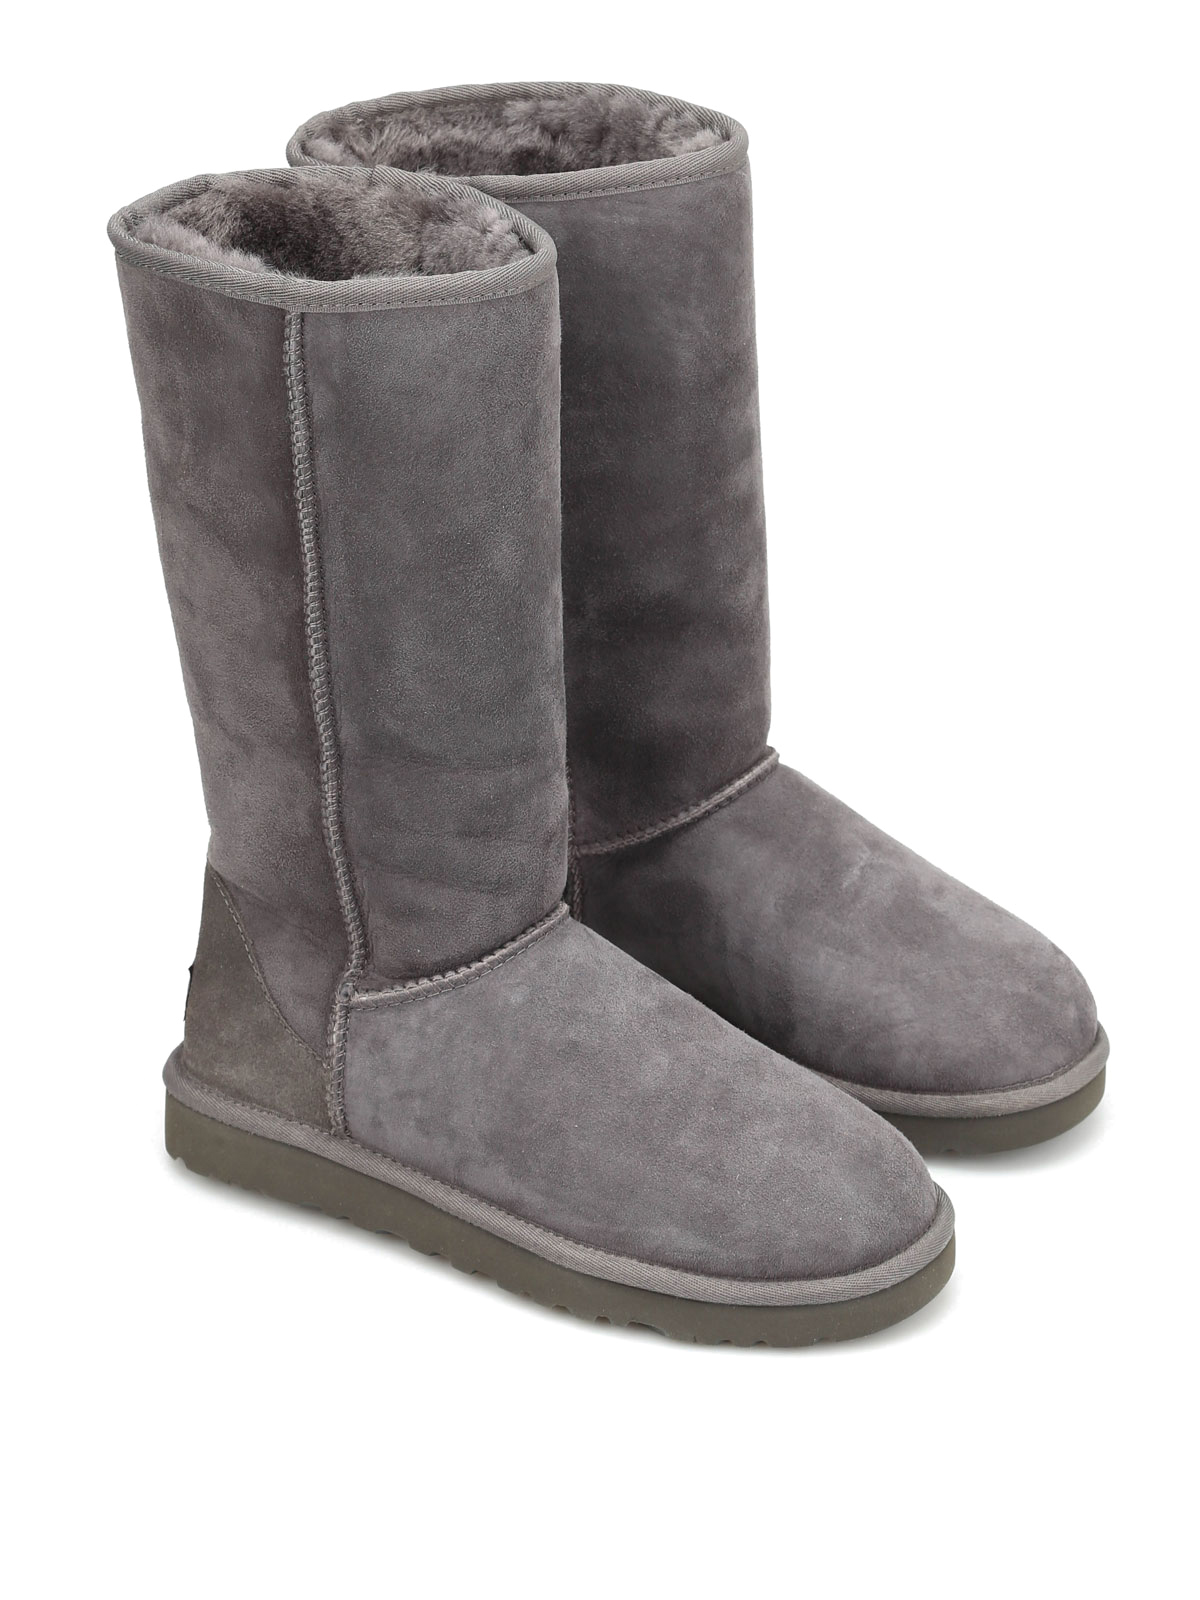 Goot Veilig Positief Boots Ugg - Classic Tall boots - 5815GREY | Shop online at iKRIX